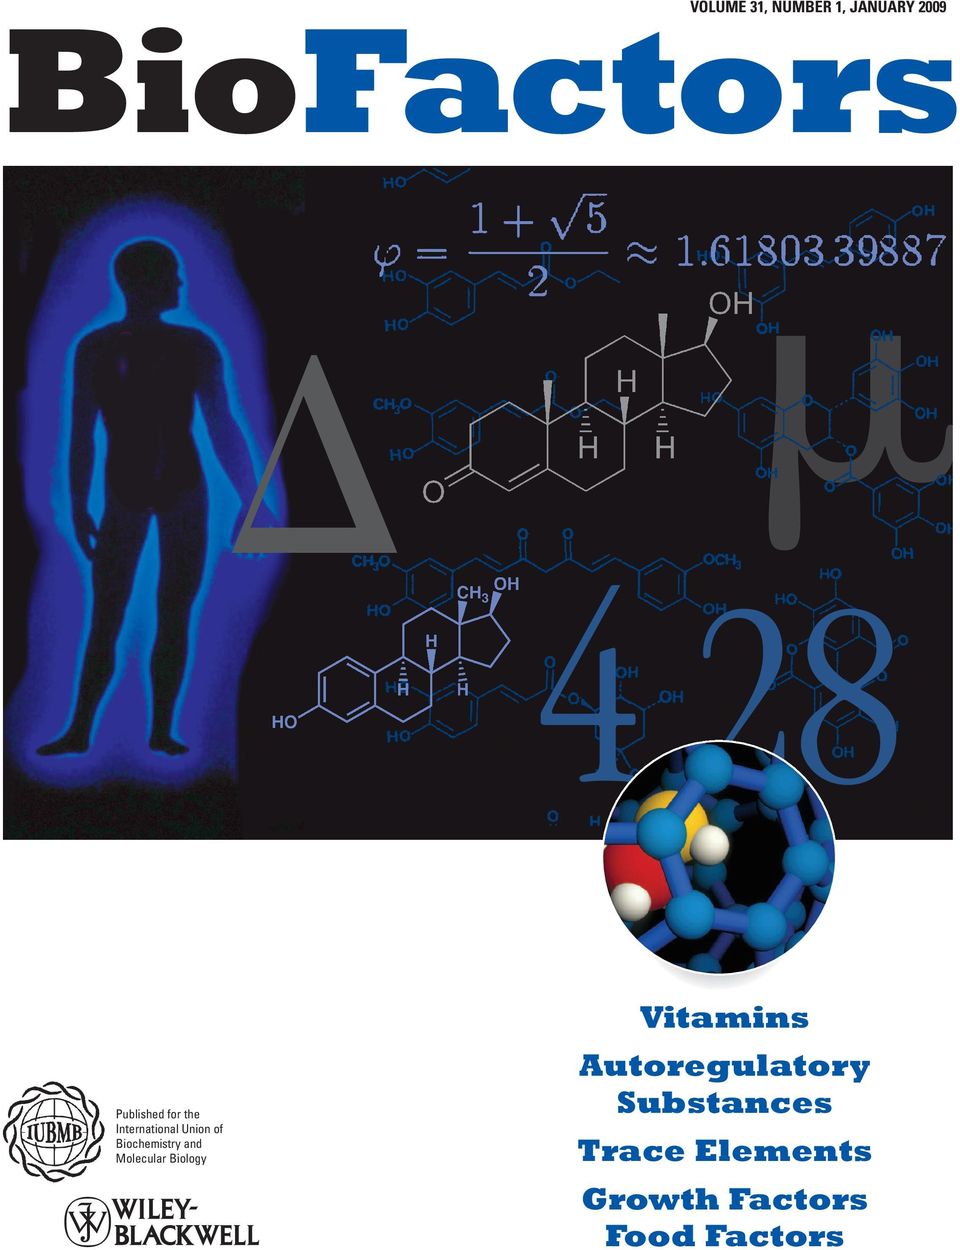 Biochemistry and Molecular Biology Vitamins